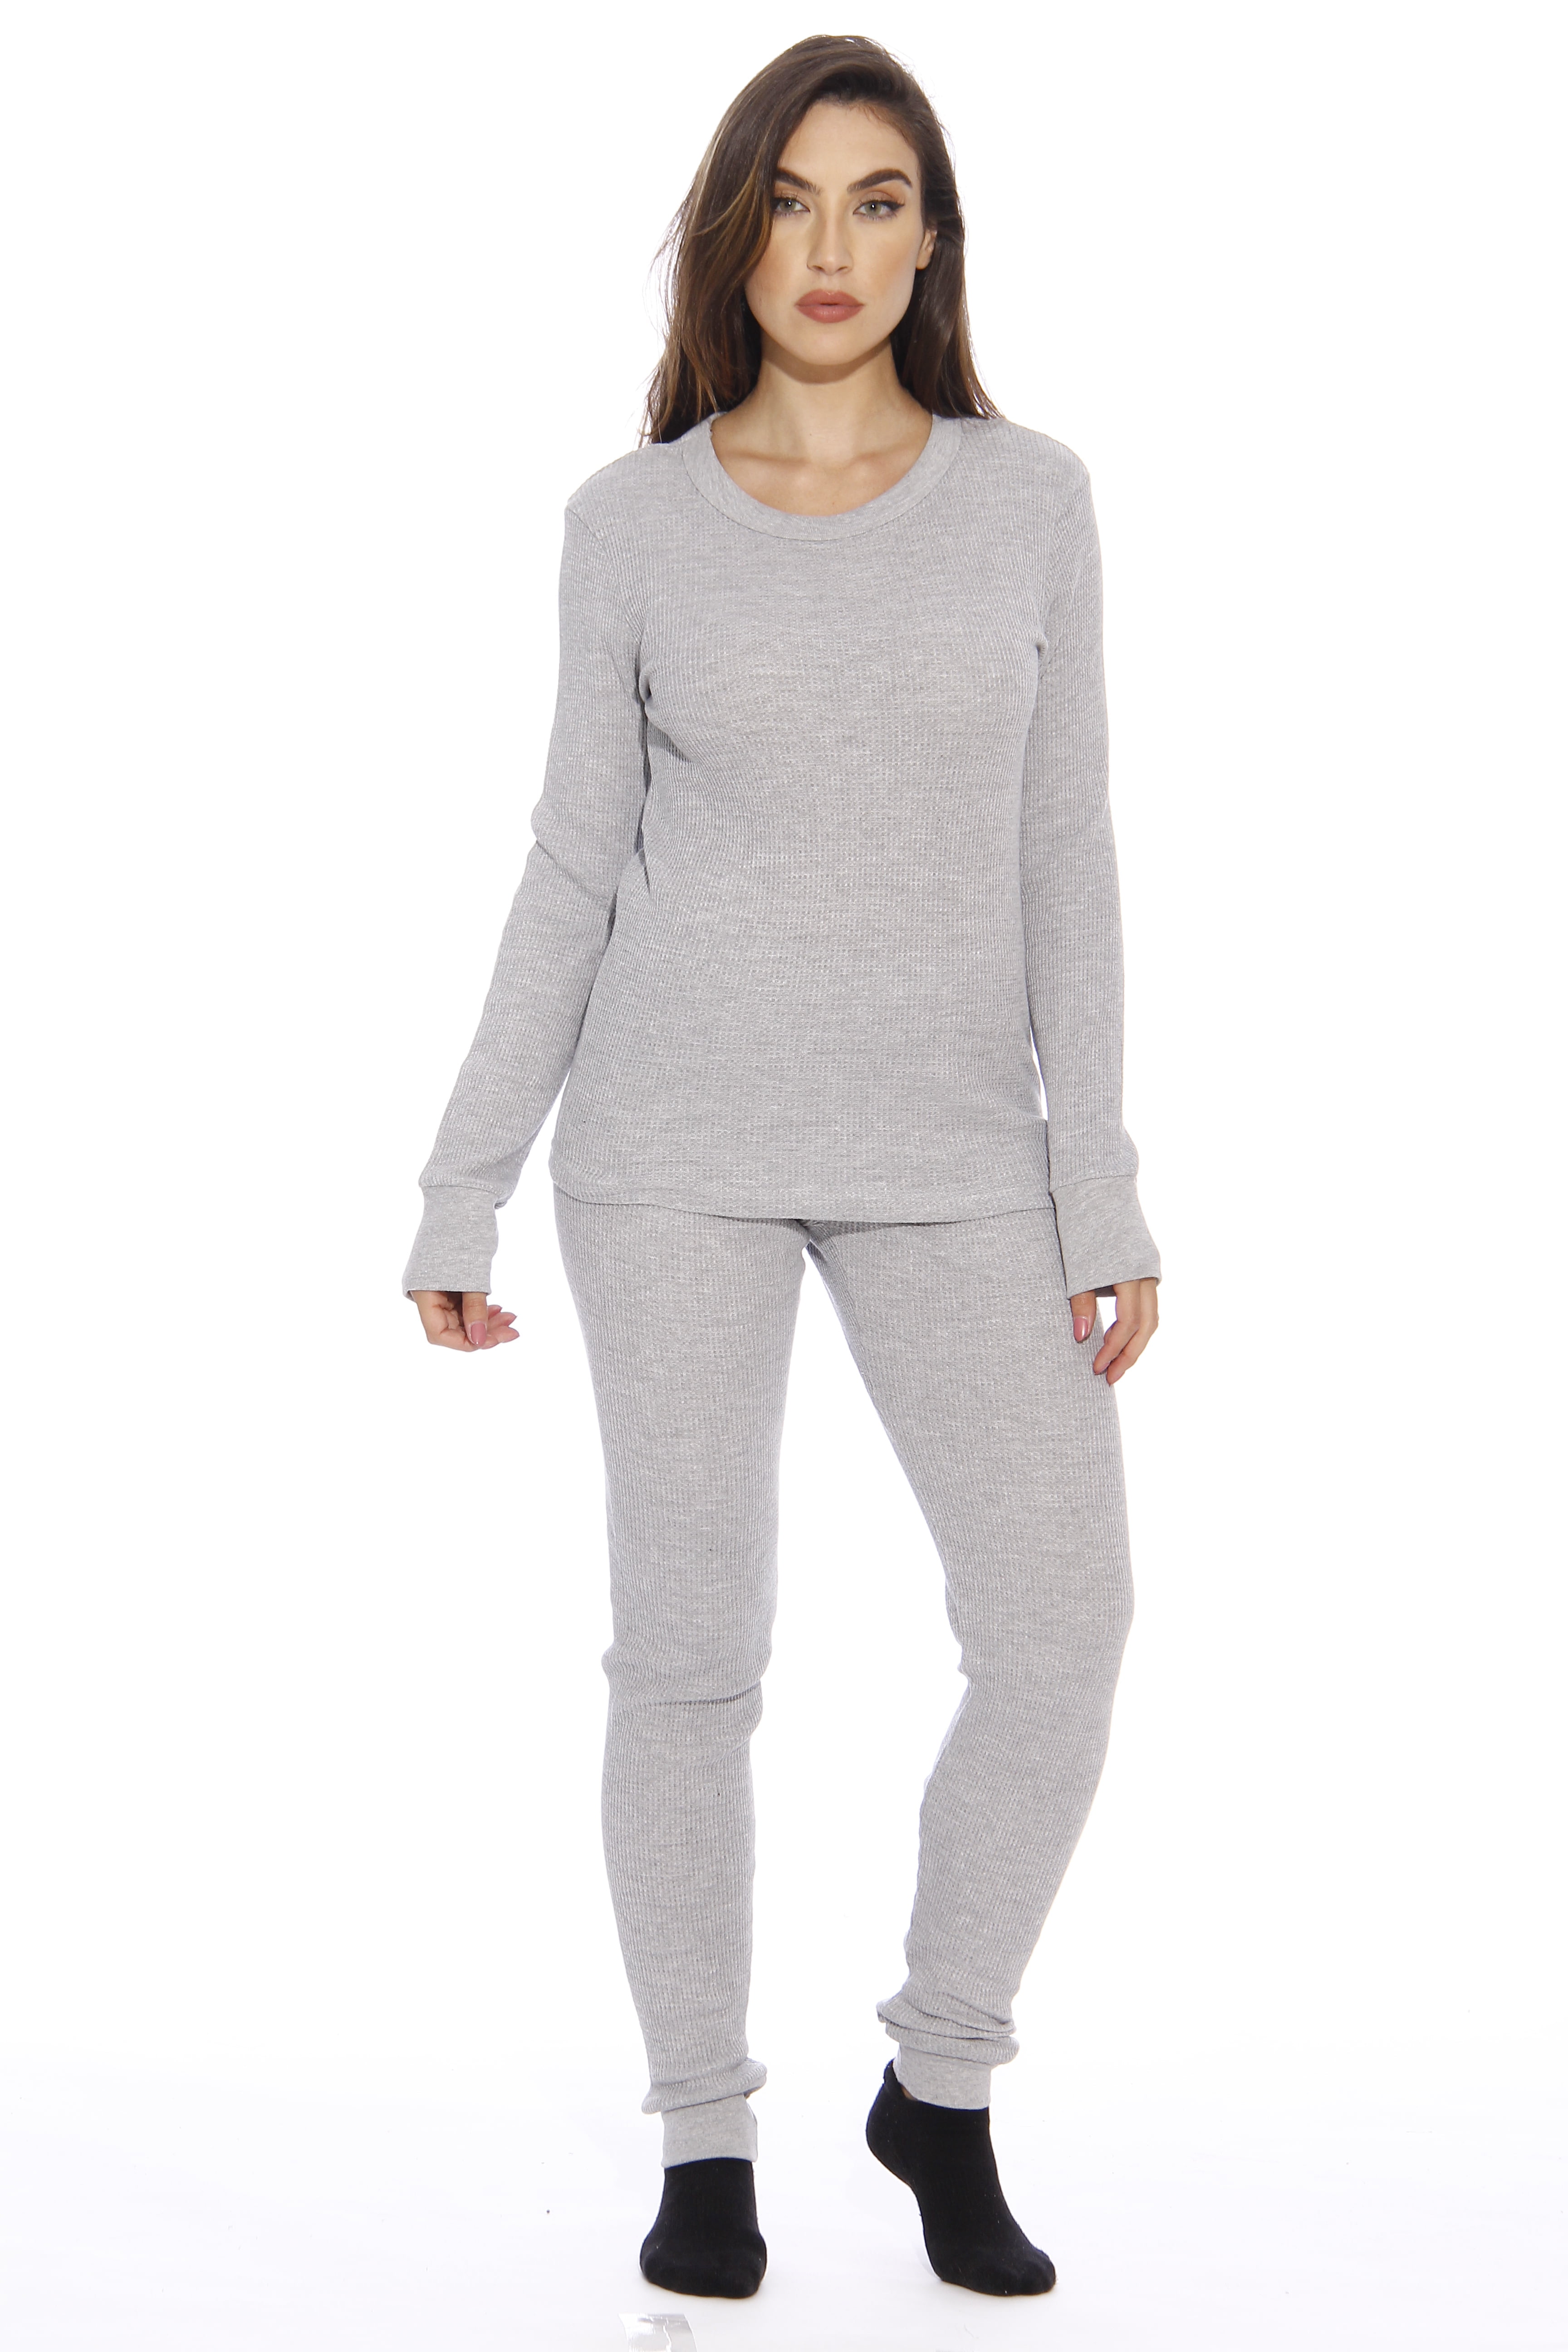 Just Love Women's Thermal Underwear Pajamas Set (Grey, Small)